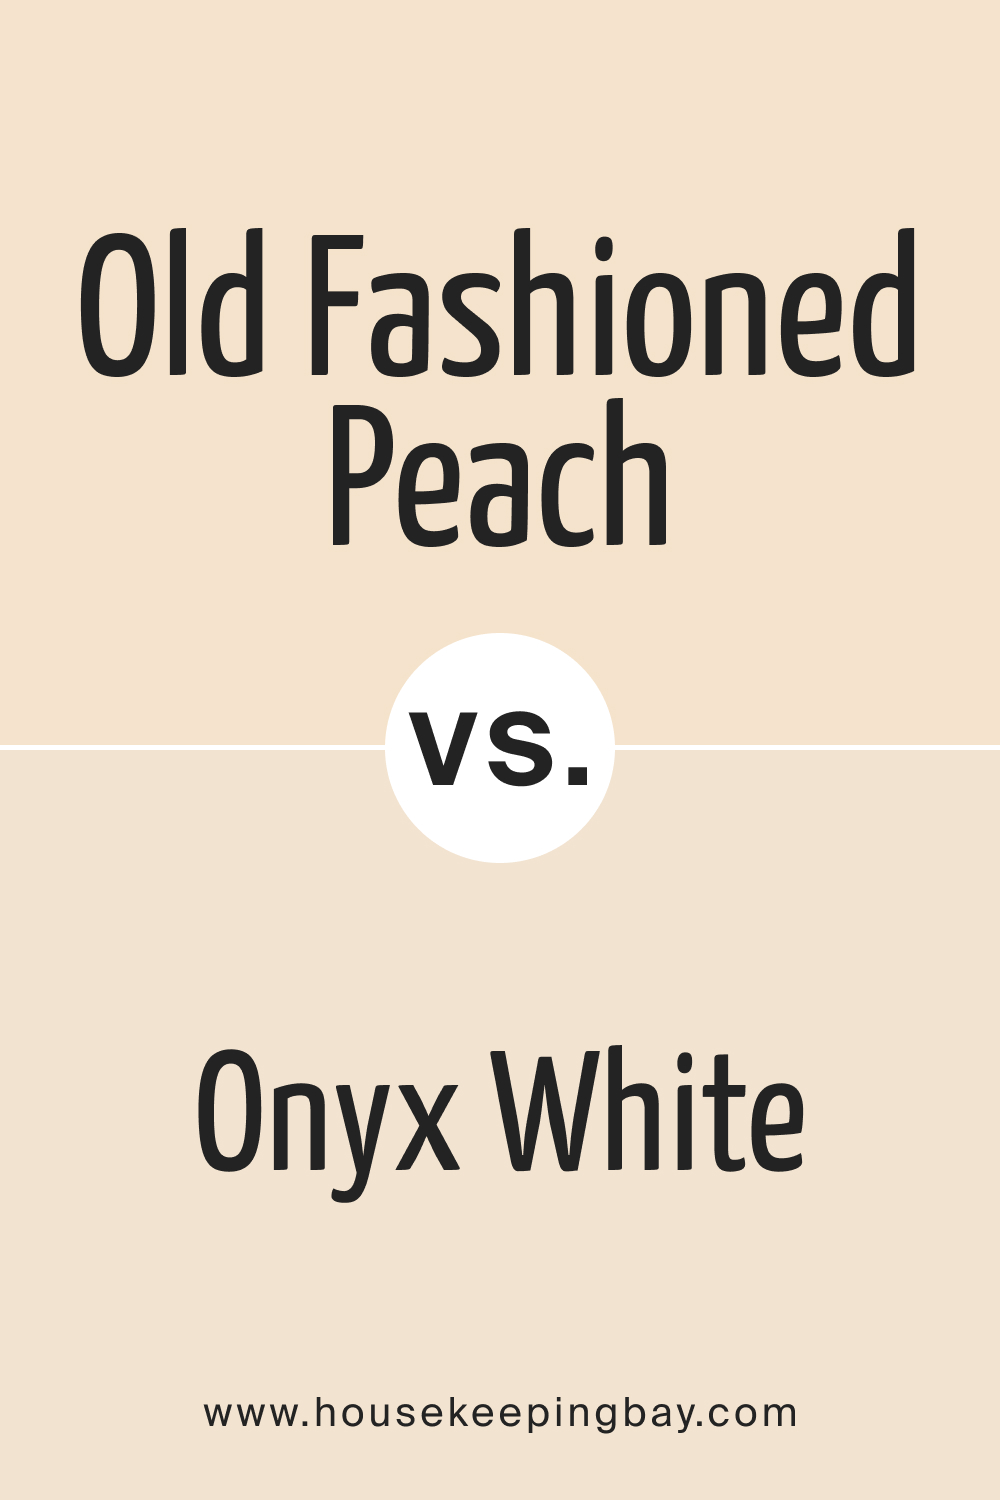 Old Fashioned Peach OC 79 vs. OC 74 Onyx White